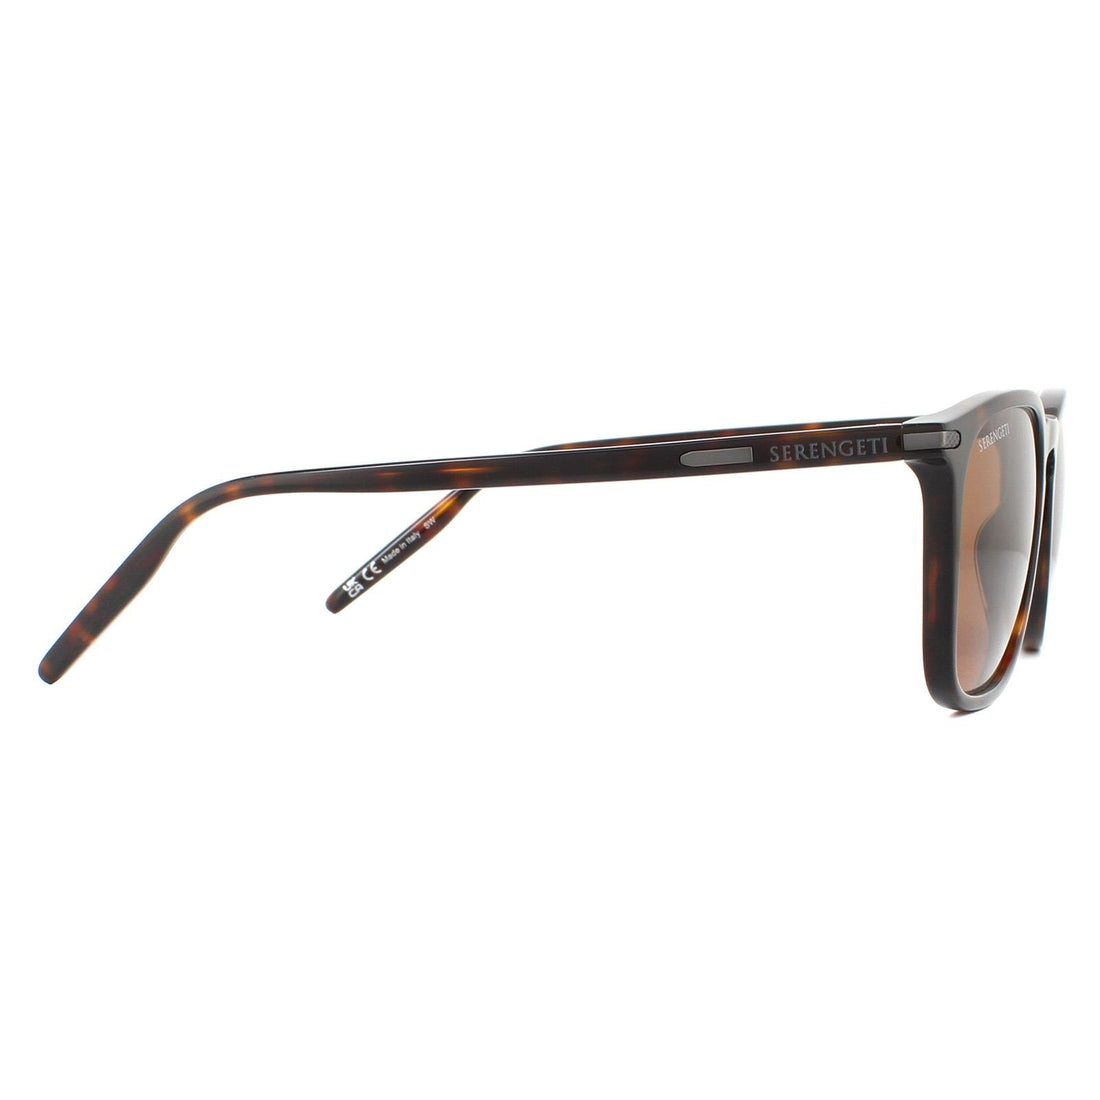 Serengeti Sunglasses Delio 8949 Shiny Dark Havana Mineral Polarized Drivers Brown